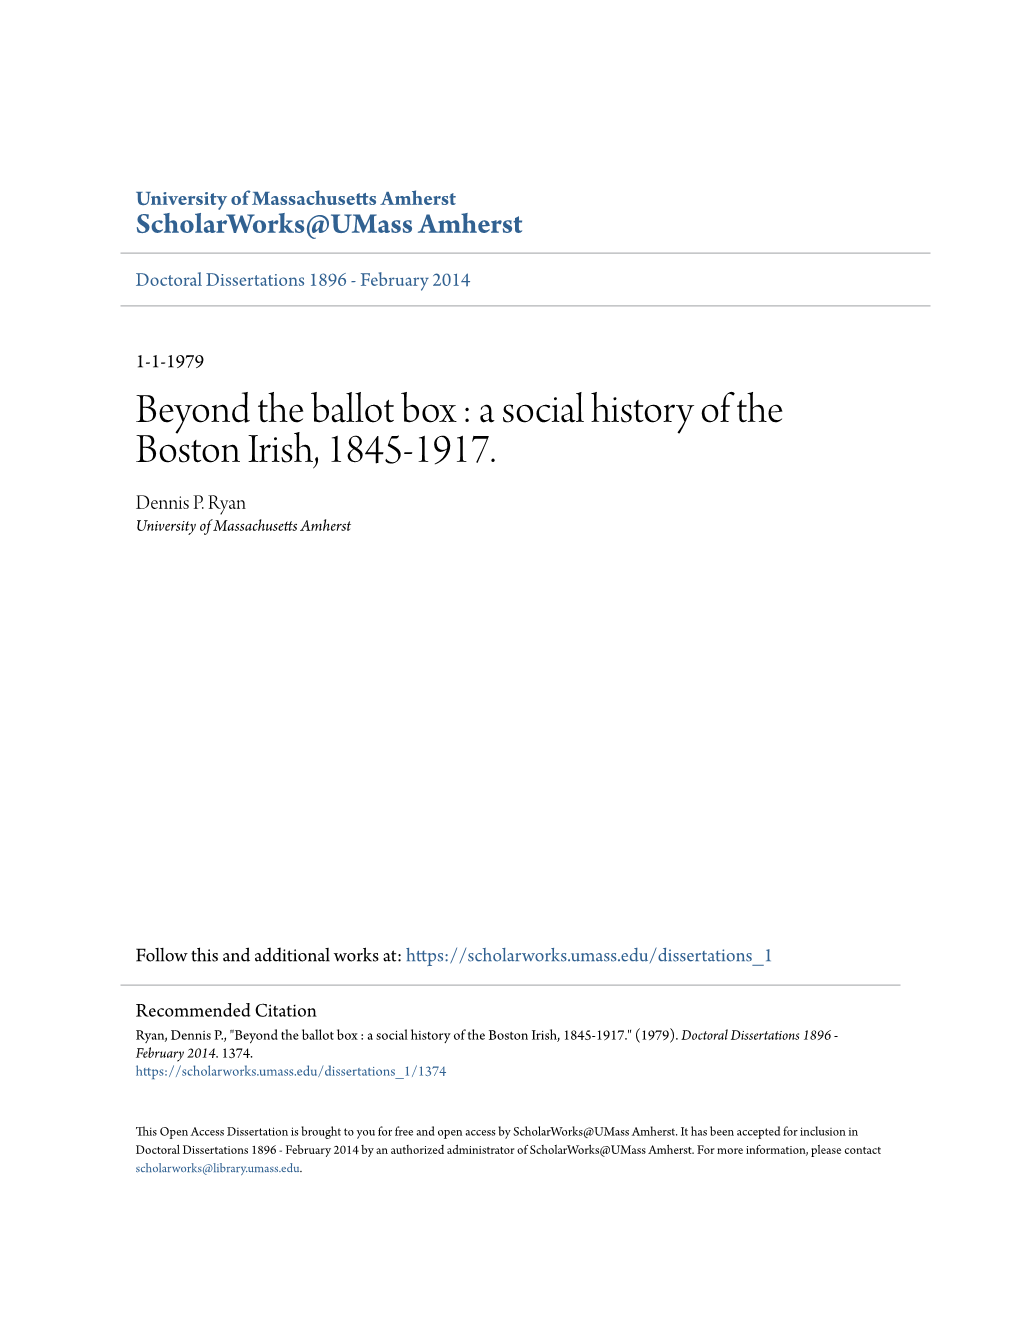 A Social History of the Boston Irish, 1845-1917. Dennis P